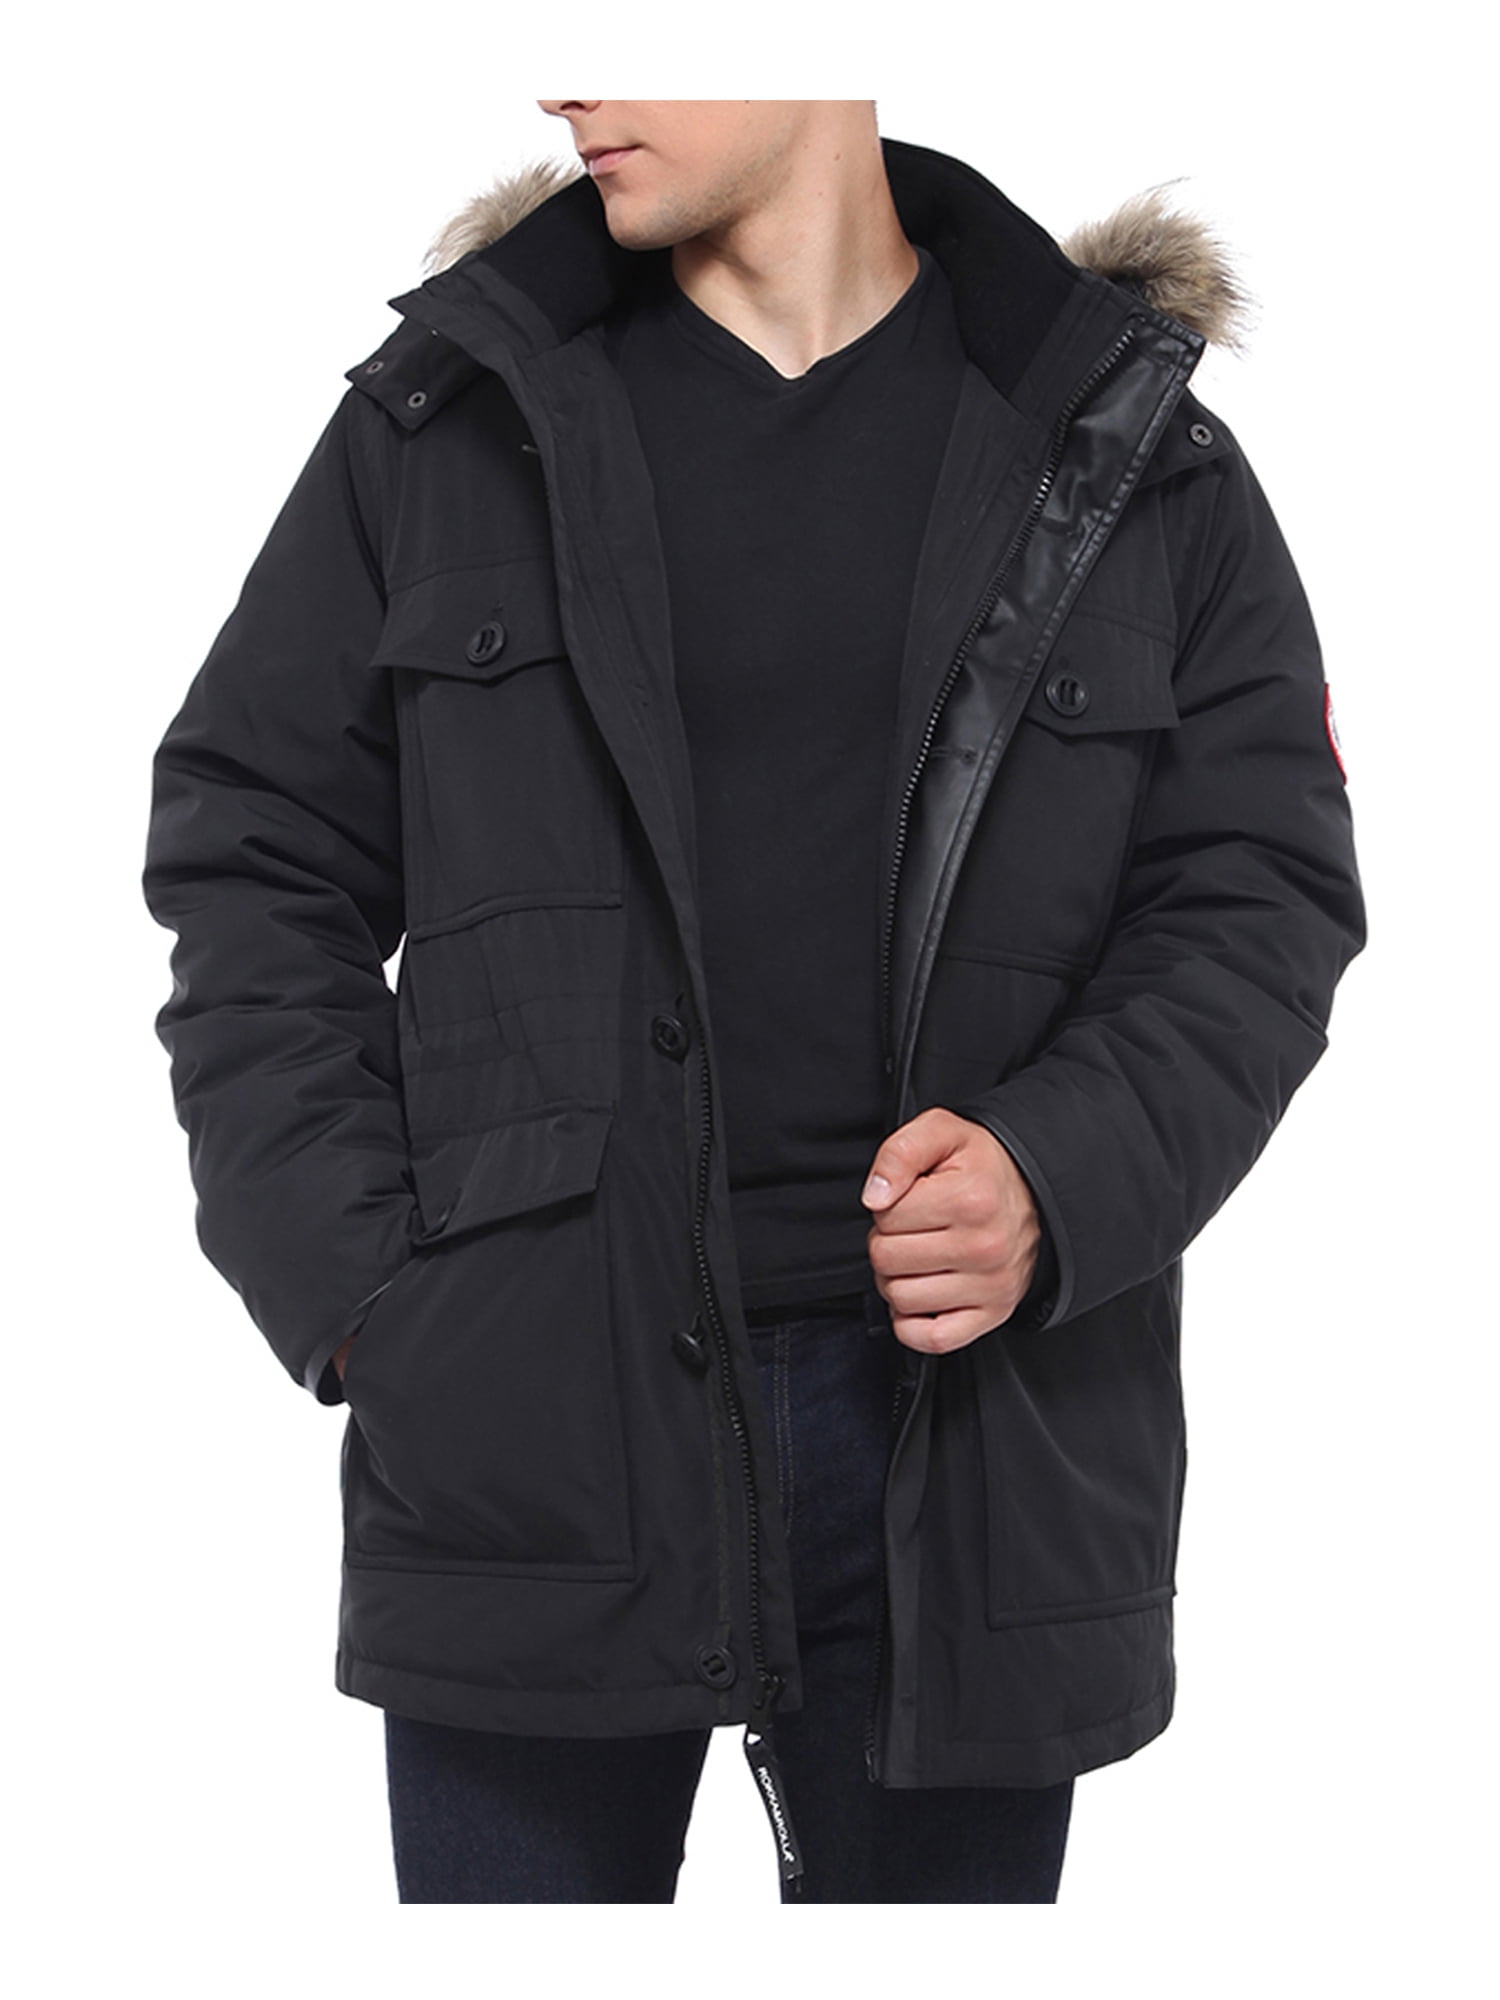 Jacket Winter Thicken Coat Overcoat Outwear Warm Parka Cotton Men's Hooded 